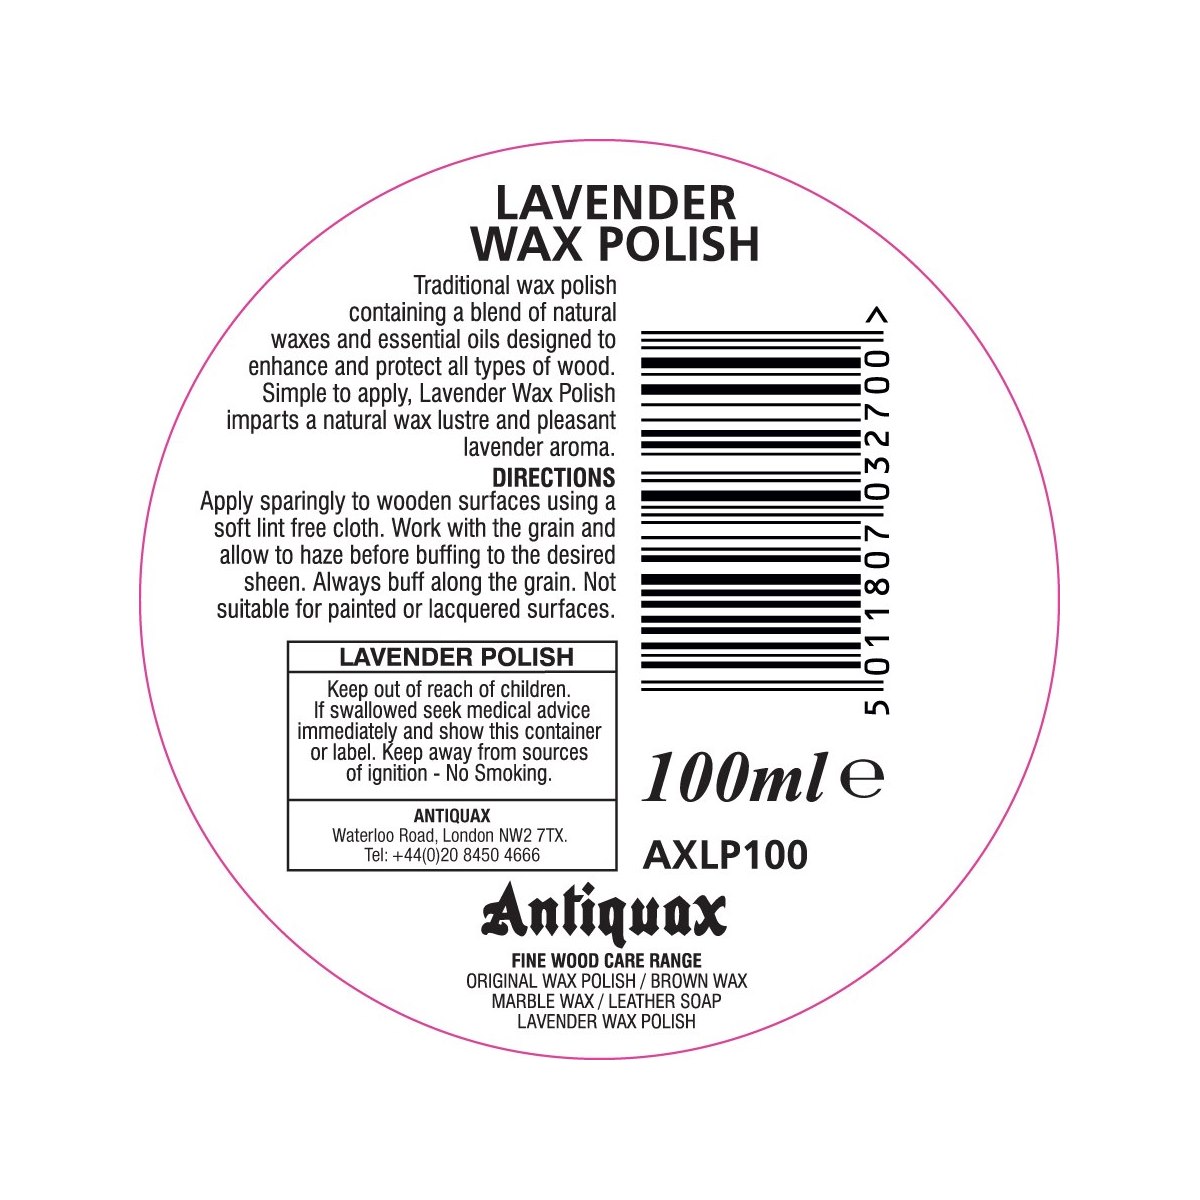 Antiquax Lavender Wax Polish Instructions